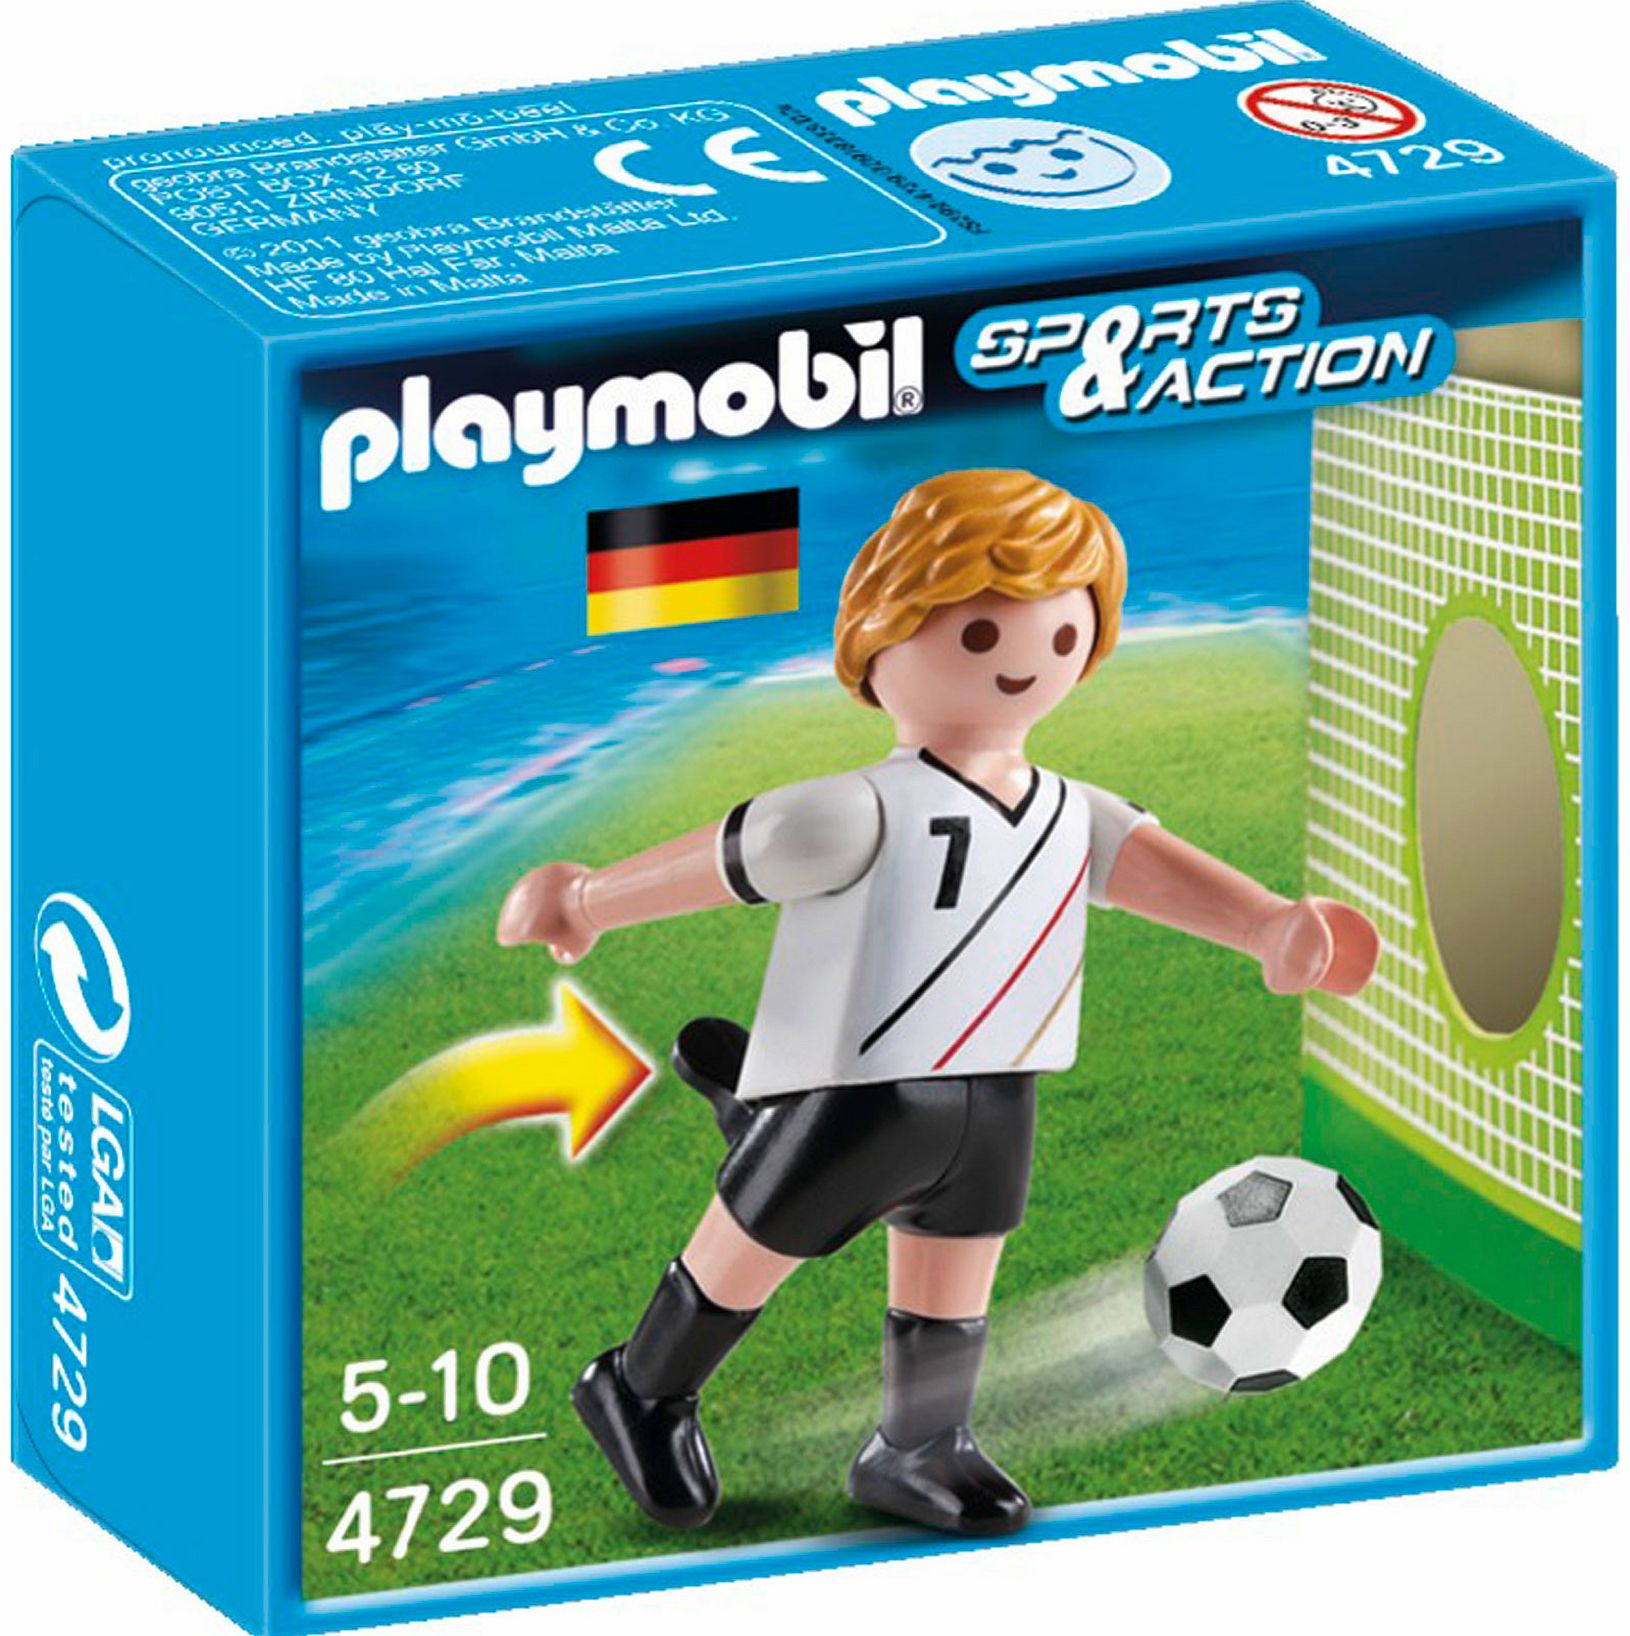 Soccer Player - Germany 4729